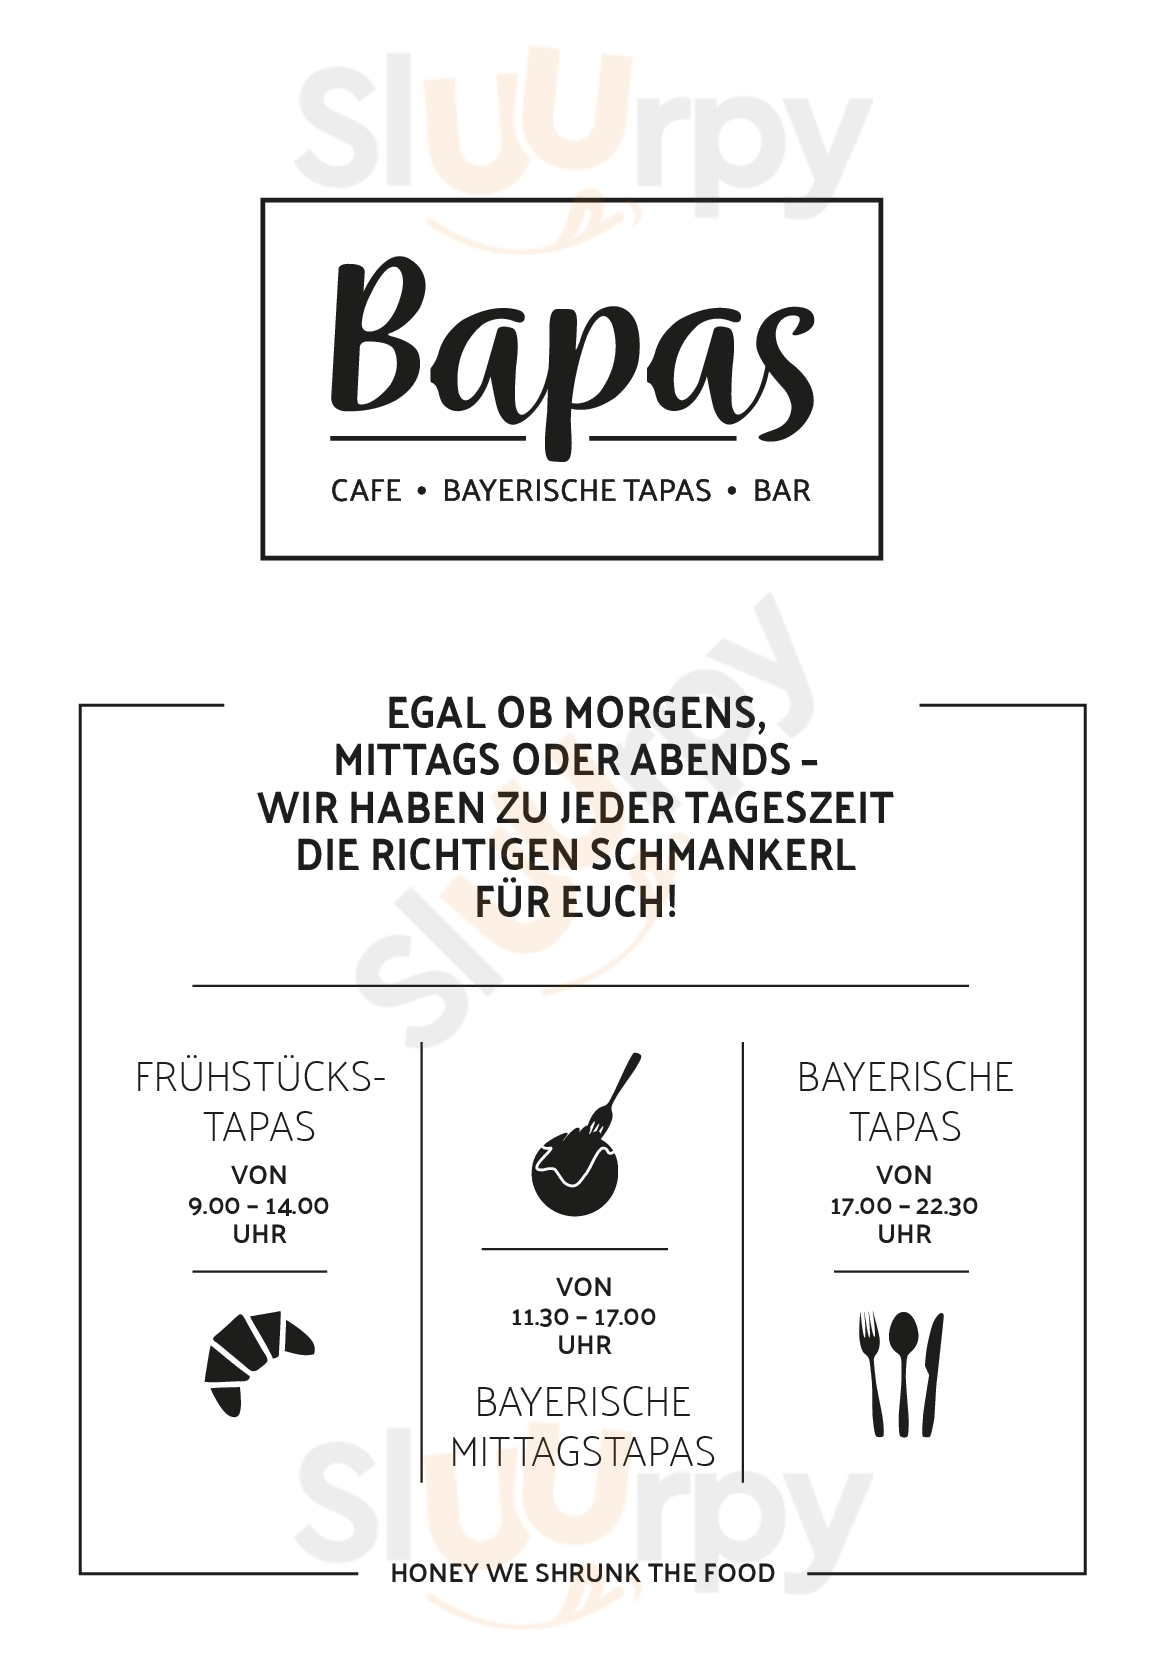 Bapas München - Bayerische Tapas - Cafe - Bar München Menu - 1